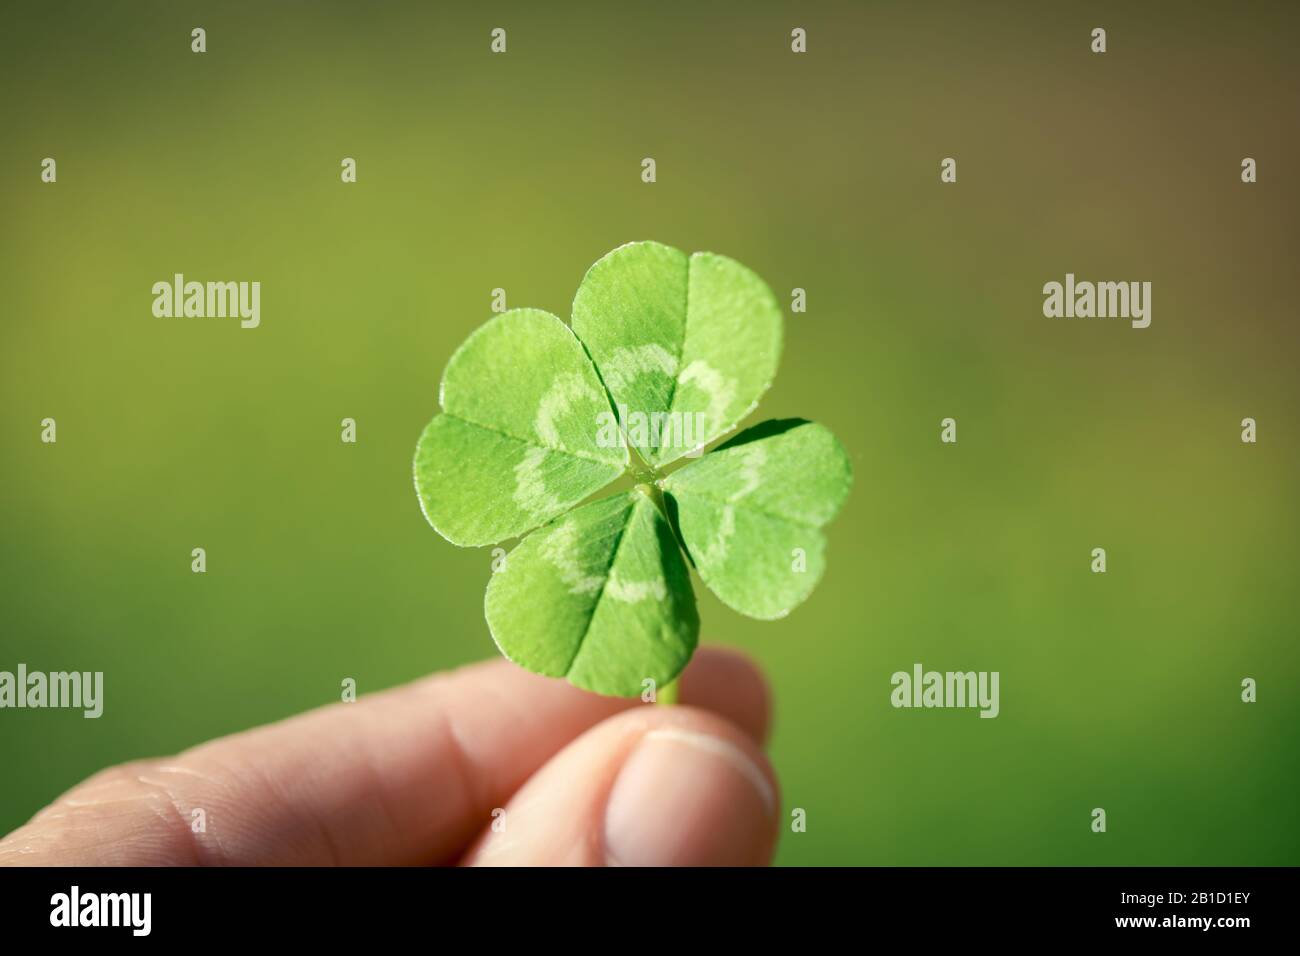 Holding a lucky four leaf clover, good luck shamrock, or lucky charm. Stock Photo